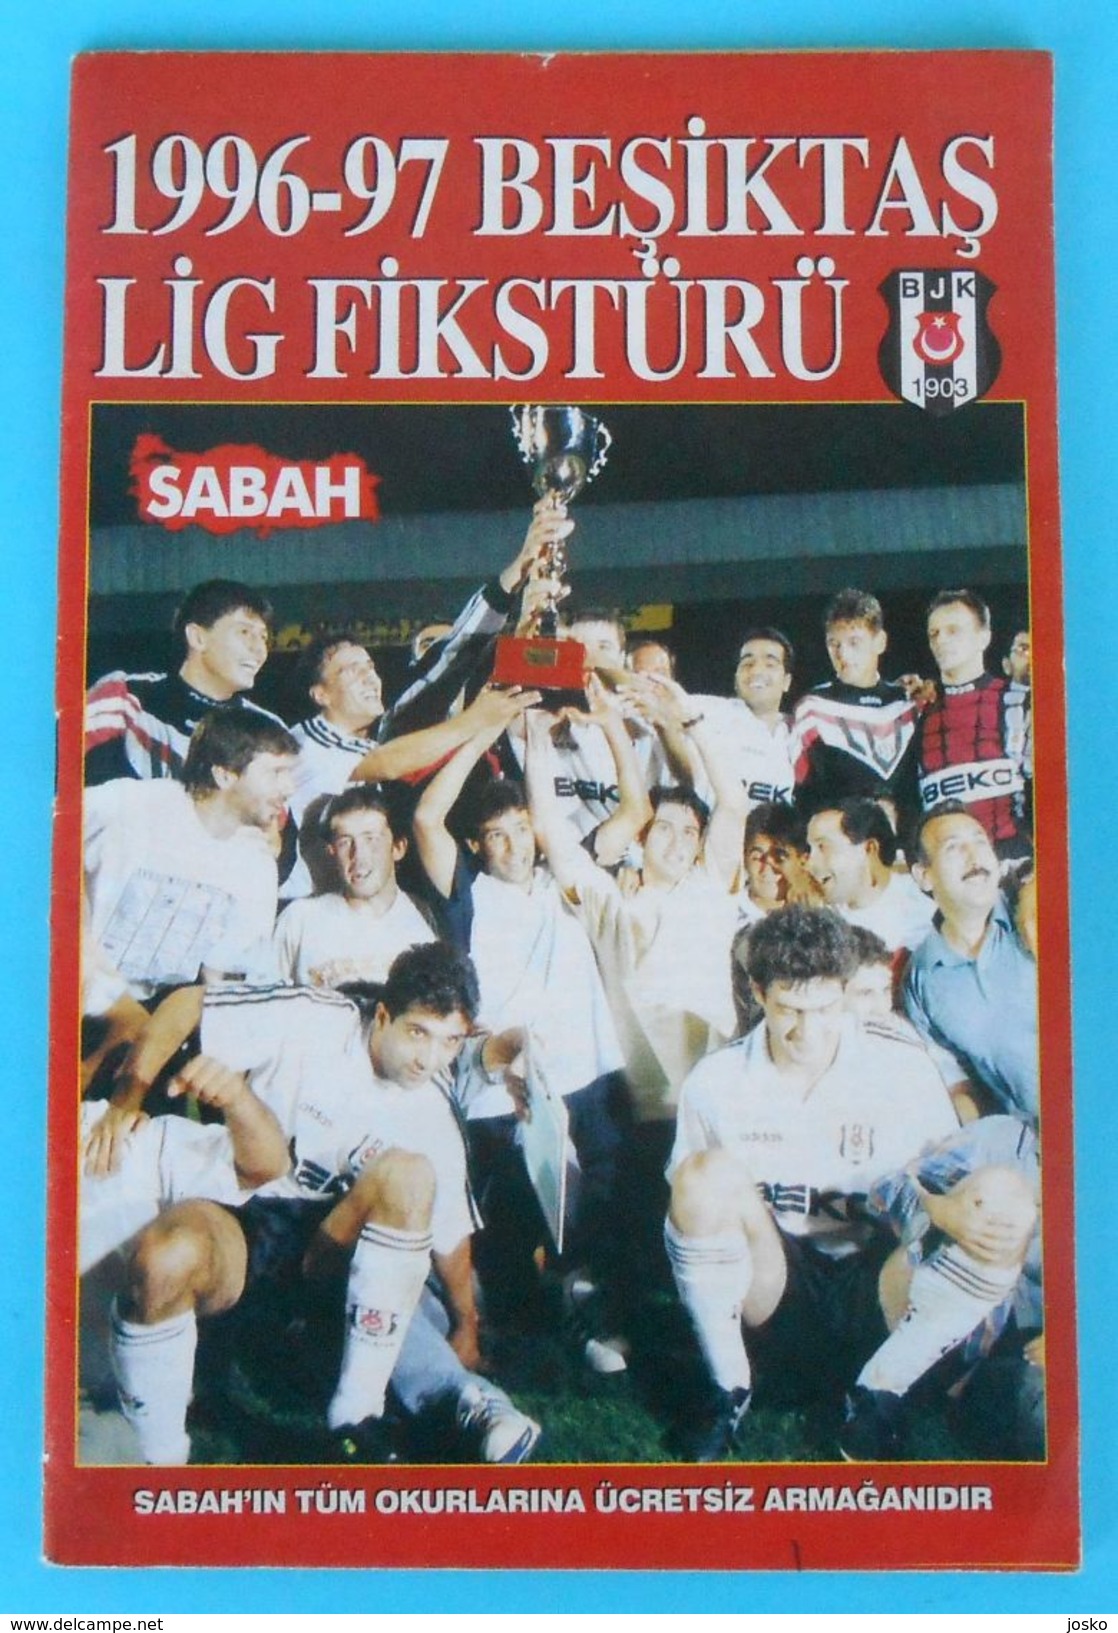 BESIKTAS JK - 1996/97. Lig Fiksturu Football Programme & Guide * Soccer Fussball Programm Turkey Turquie Türkei Turquia - Books